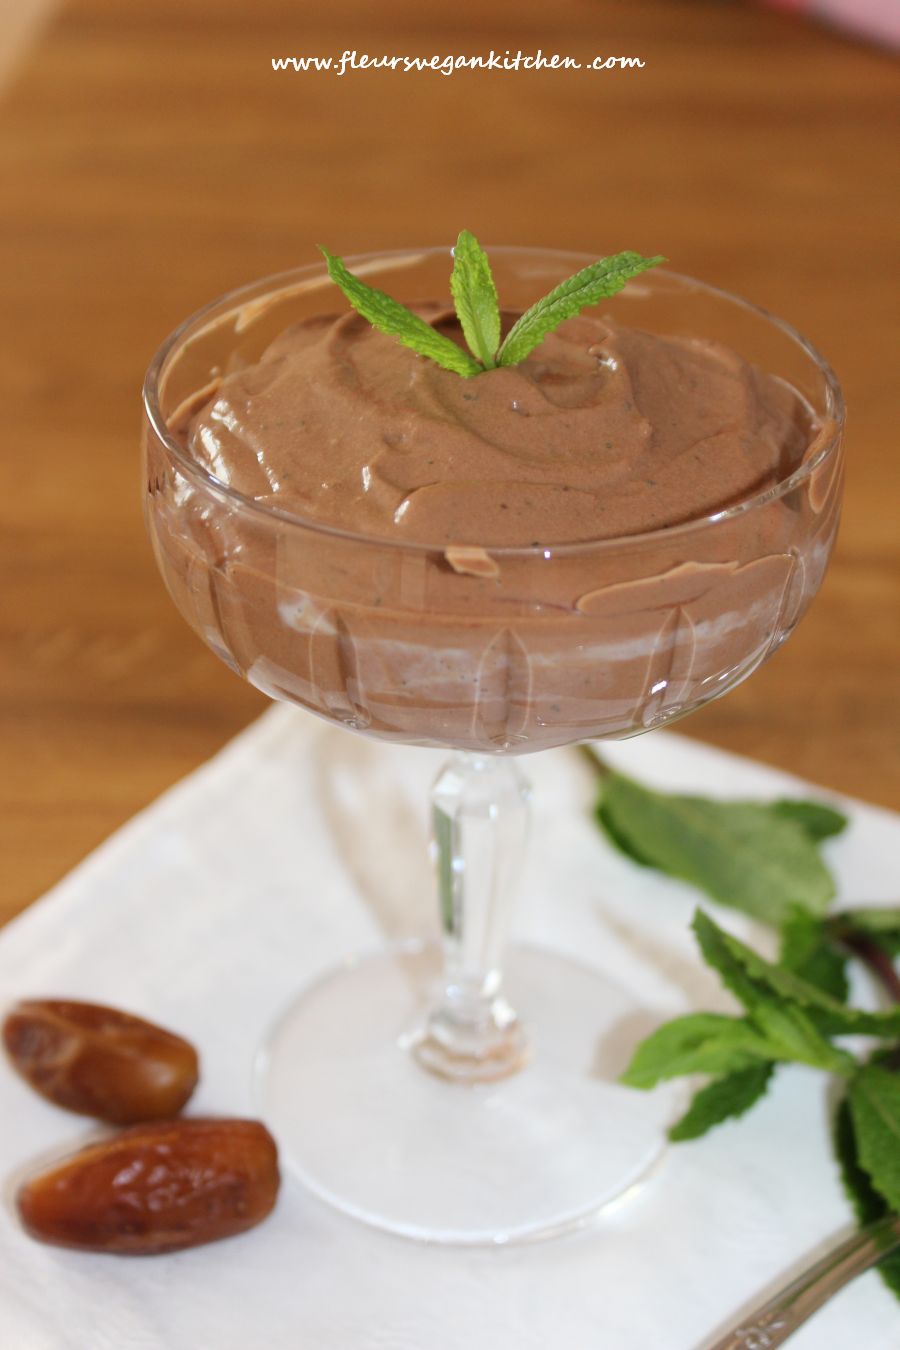 Chocolate mint mousse